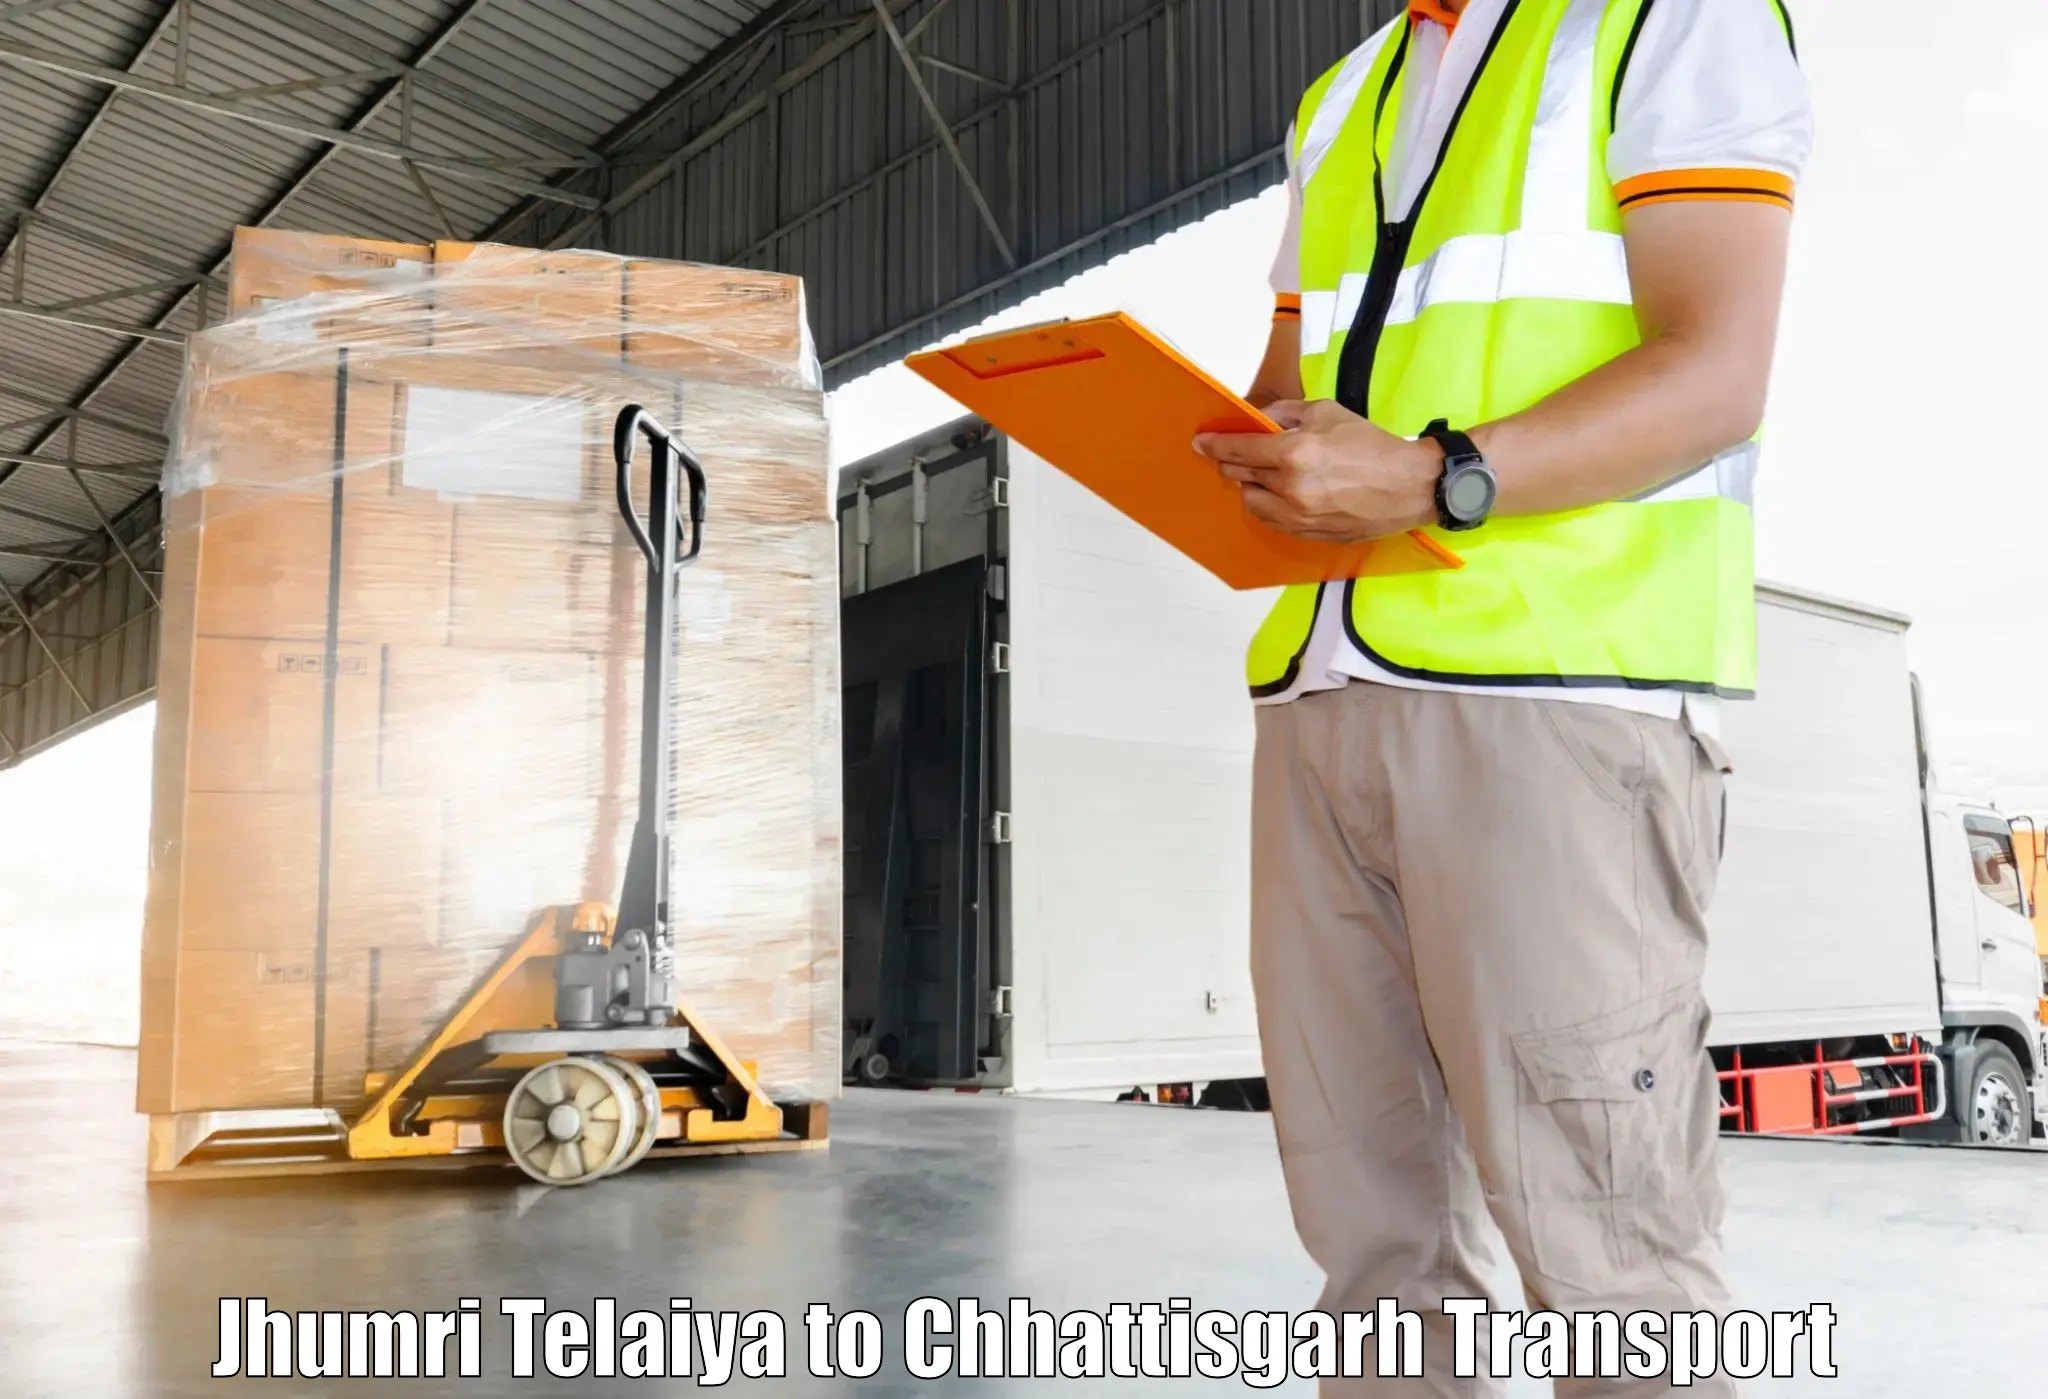 Container transport service Jhumri Telaiya to Korea Chhattisgarh